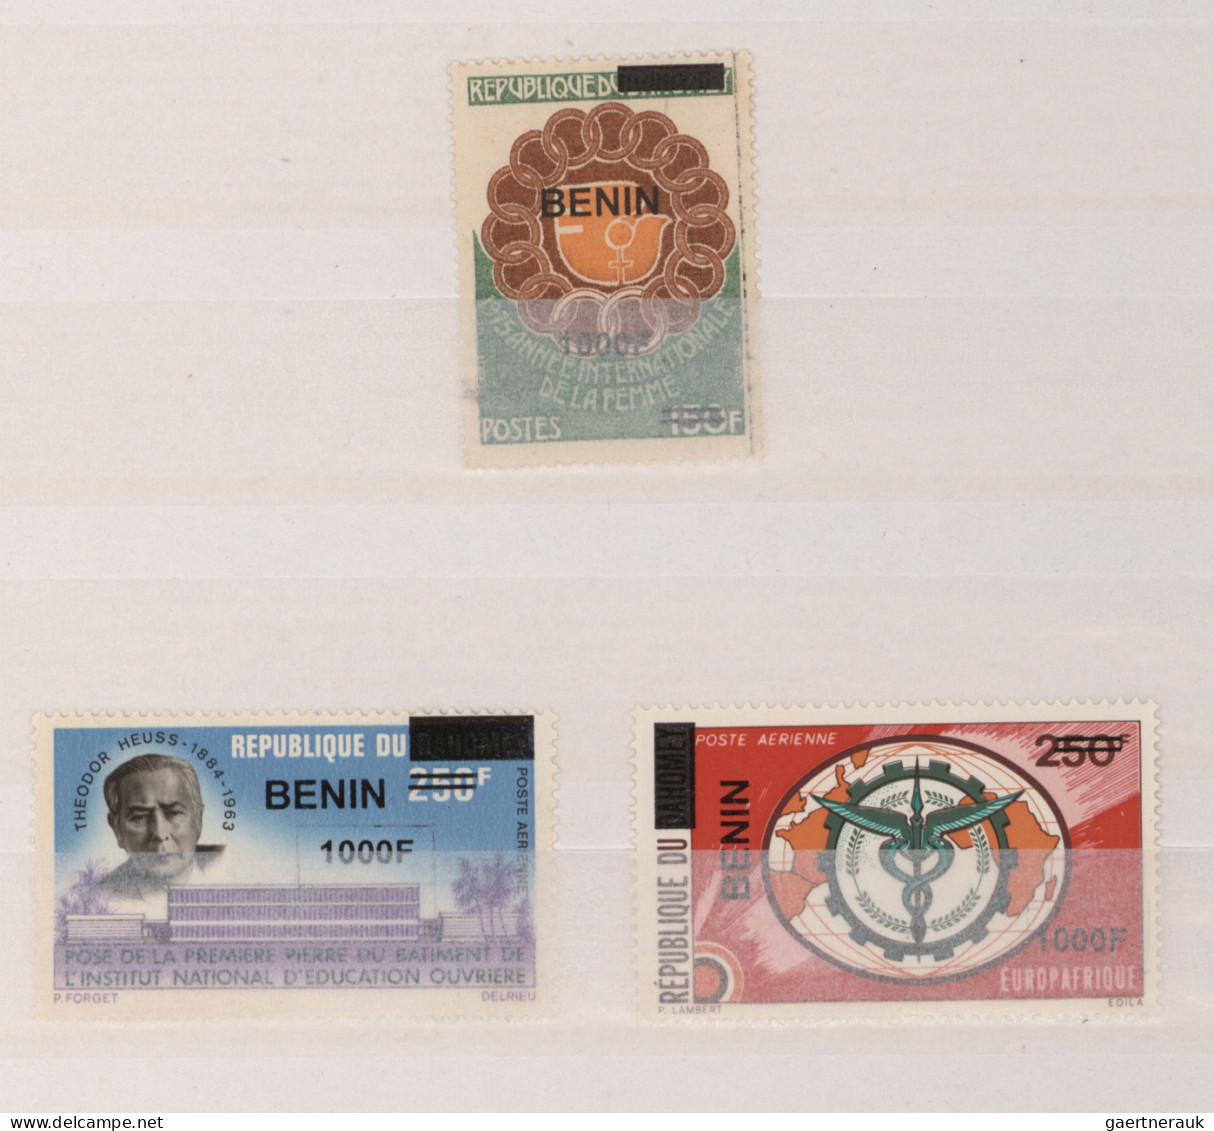 Benin: 2009 Provisionals complete set of 64 overprinted values, mint never hinge